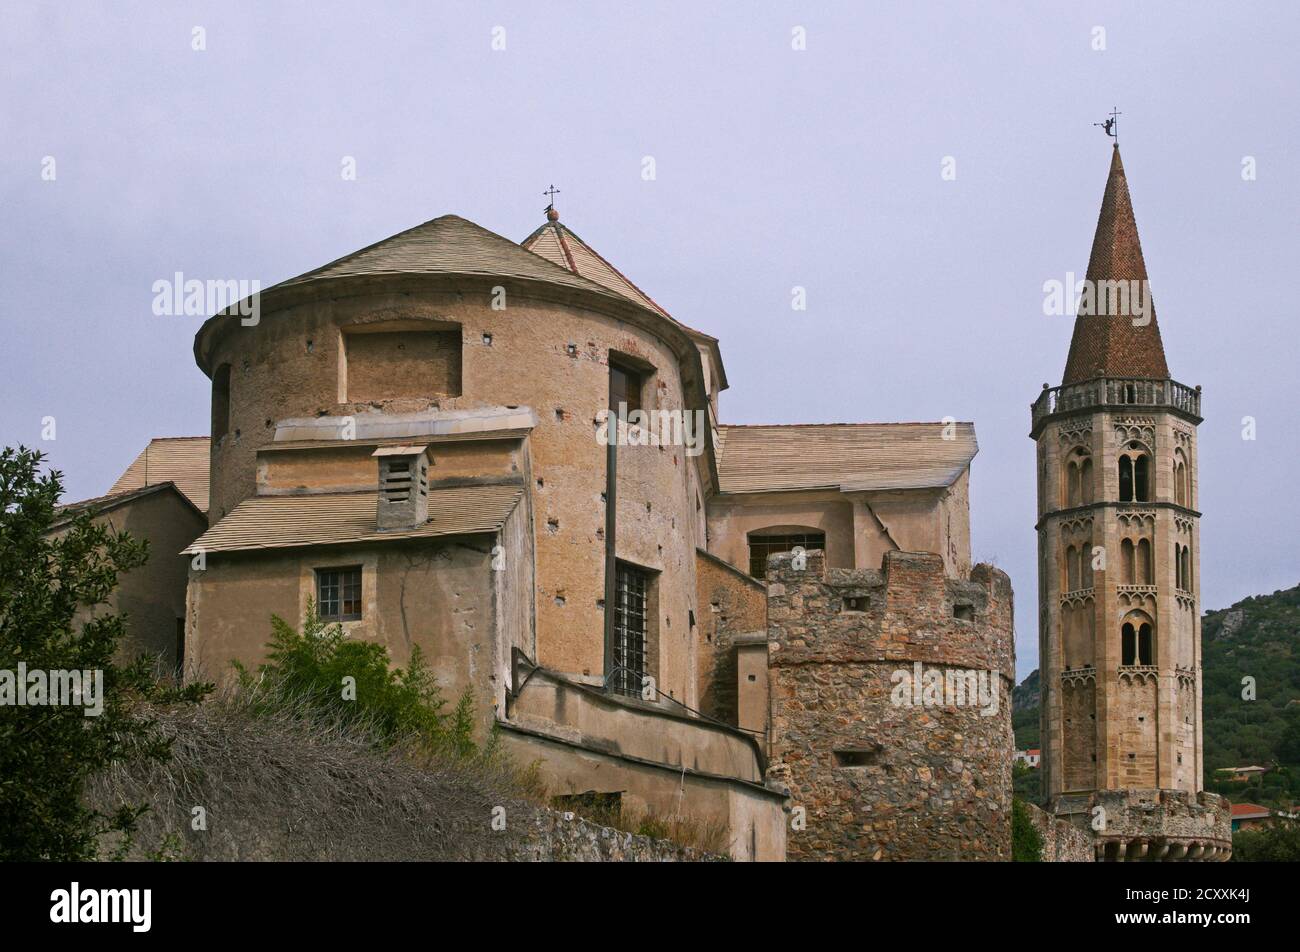 collegiata (basilica)di San Biagio with bell tower in the ancient village of Finalborgo, Liguria region, Italy Stock Photo